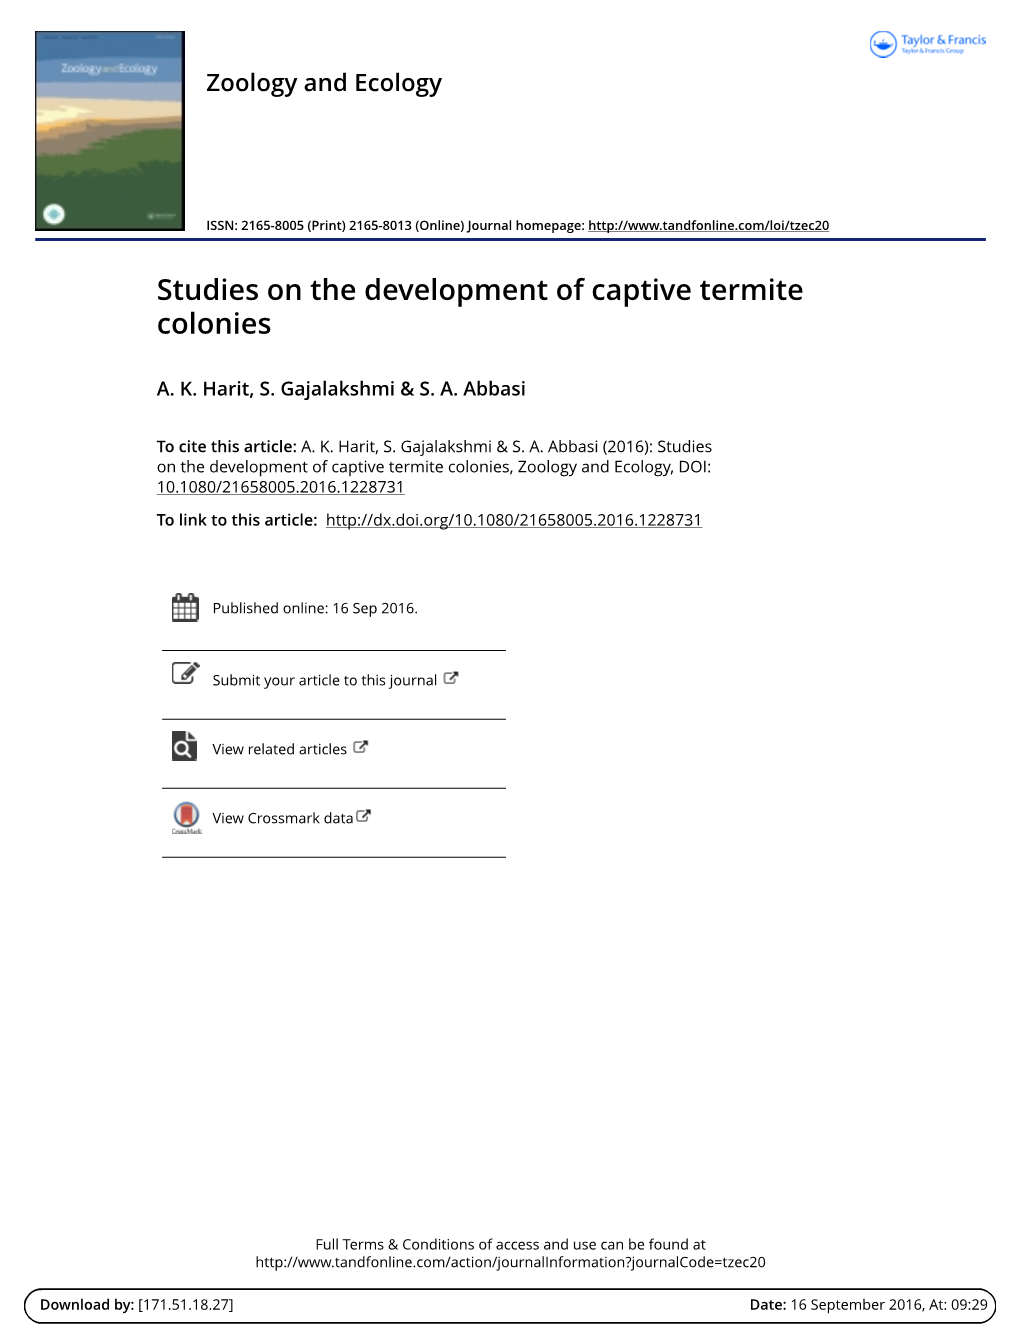 Studies on the Development of Captive Termite Colonies